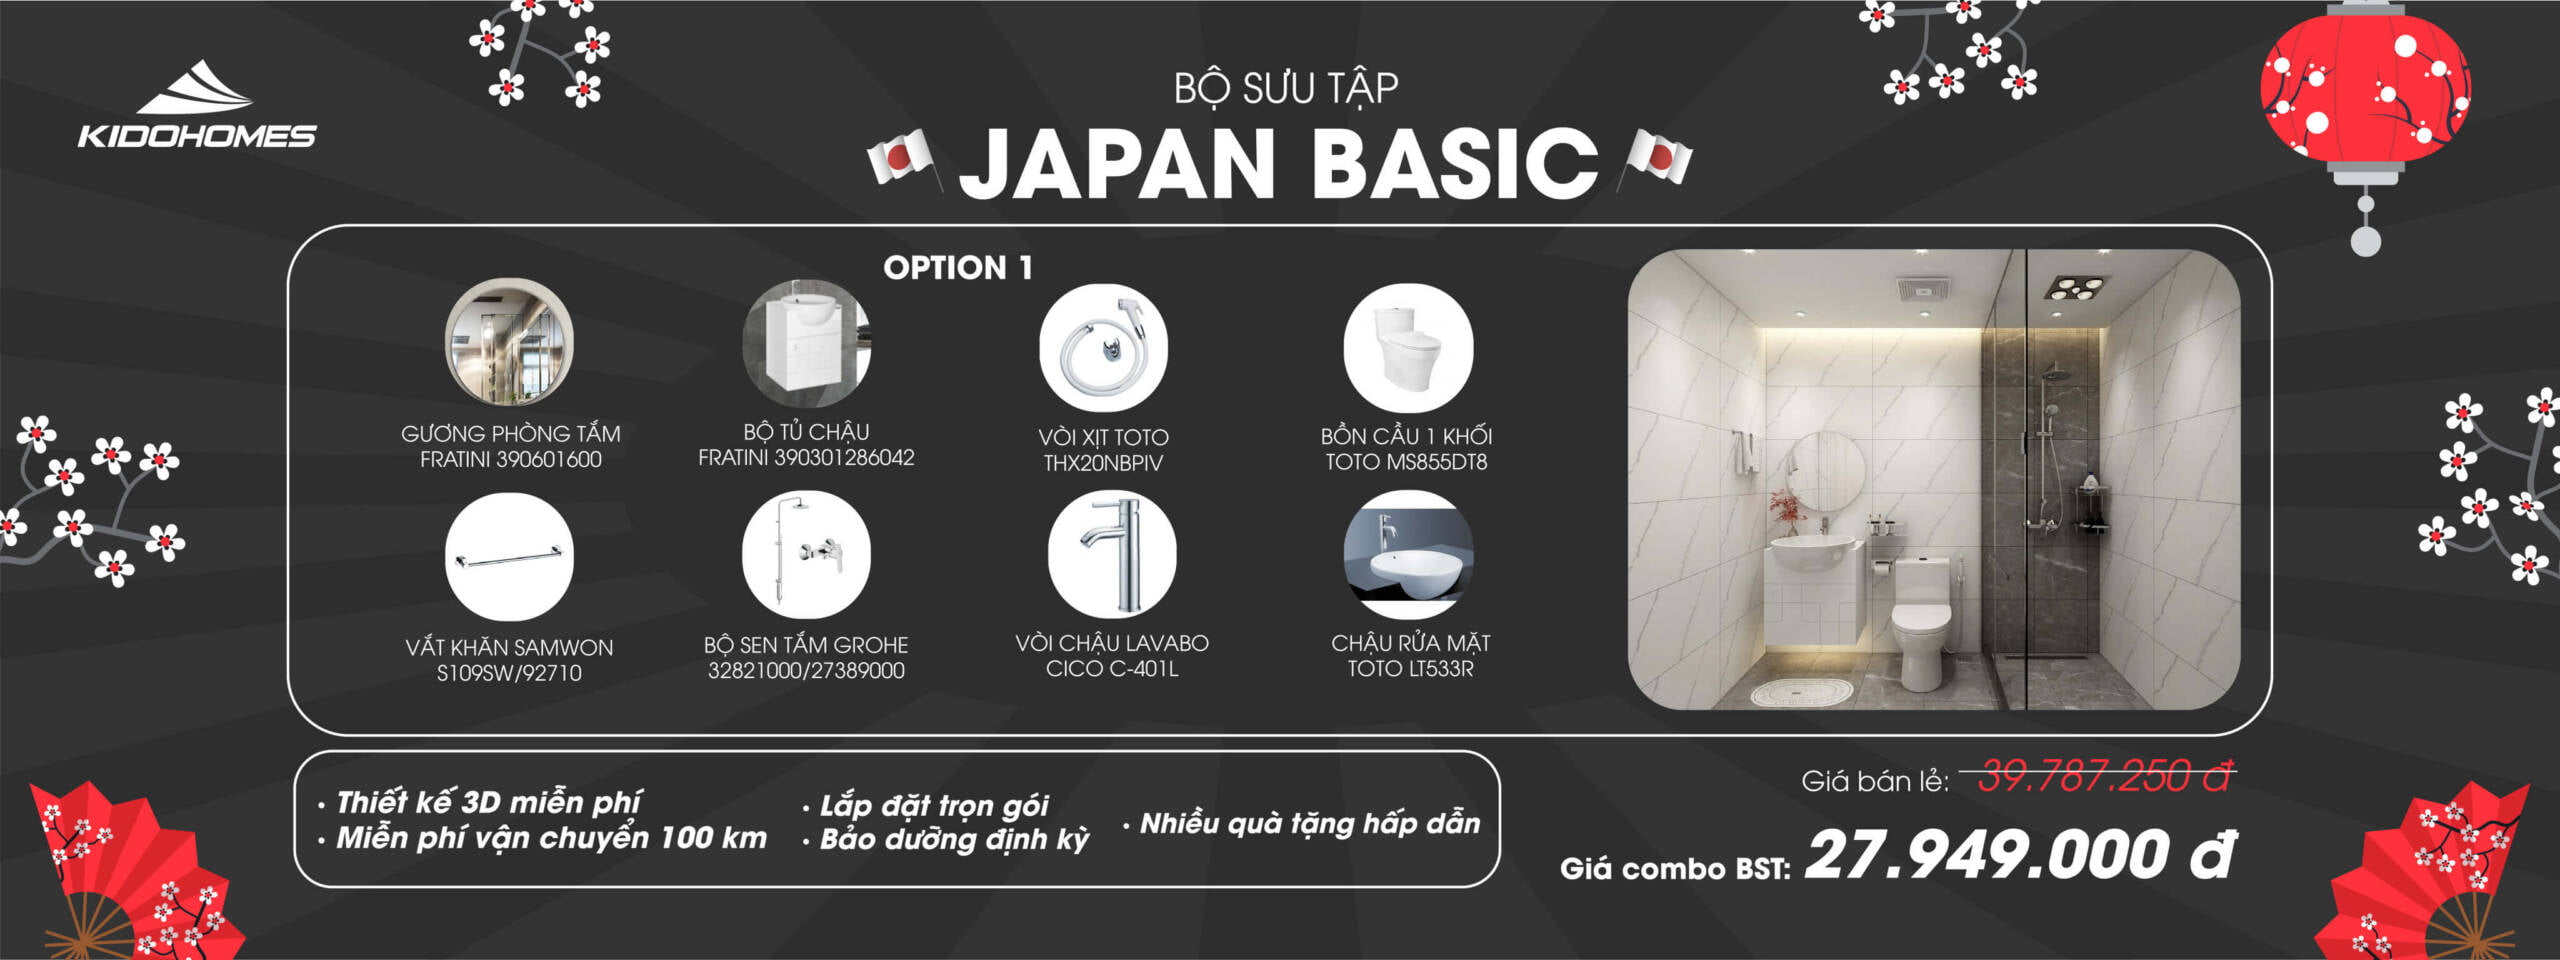 slide japan basic 1 scaled